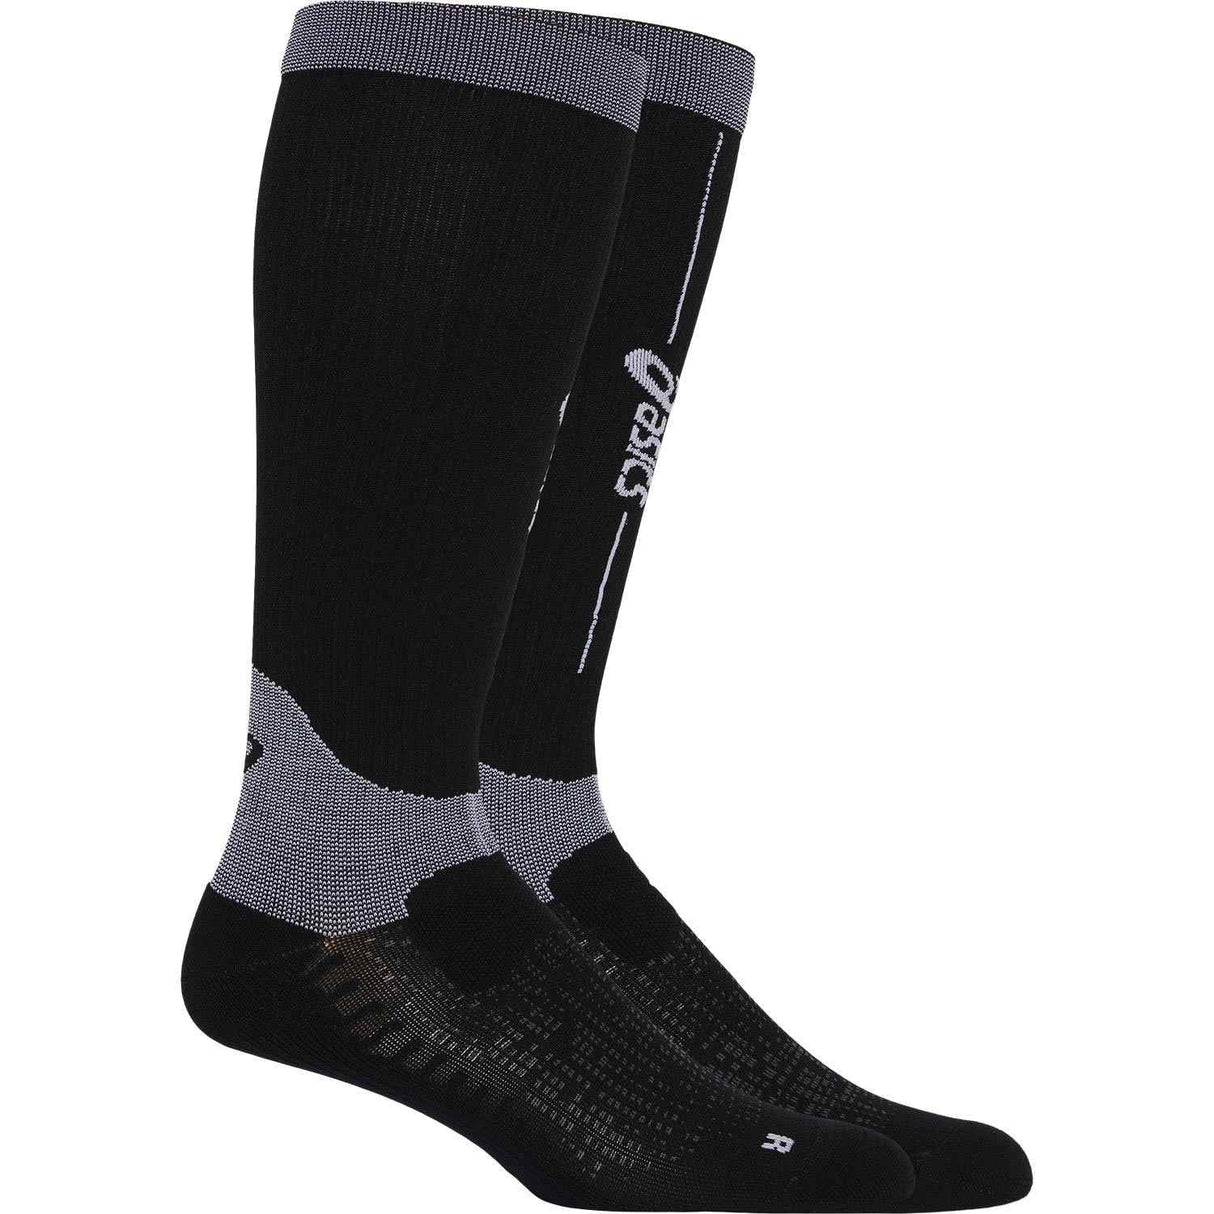 Asics Performance Compression Socks